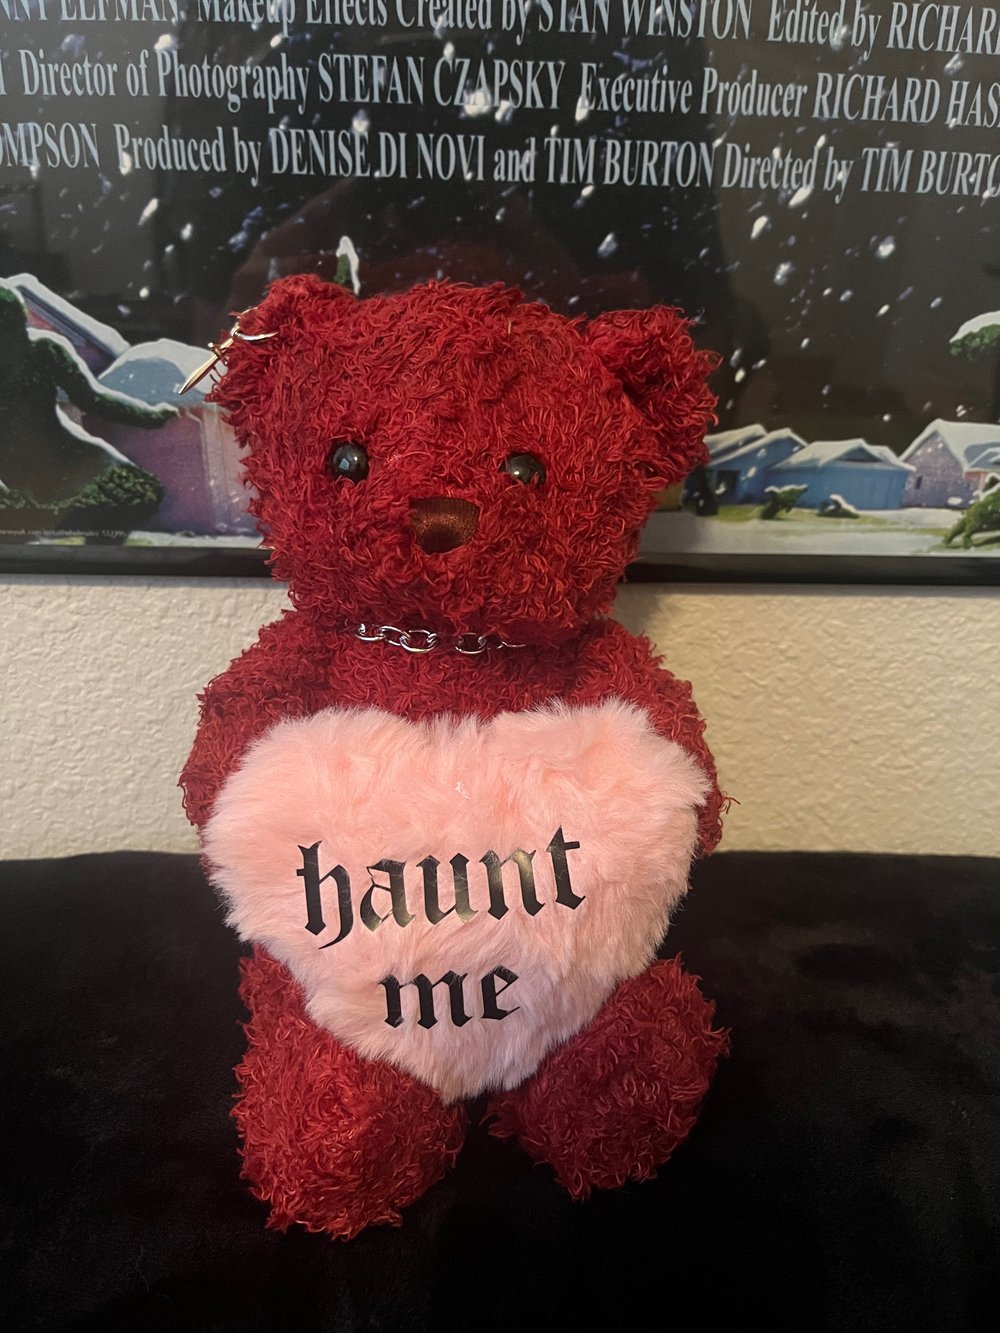 Limited Edition “Haunt Me” Teddy Bear